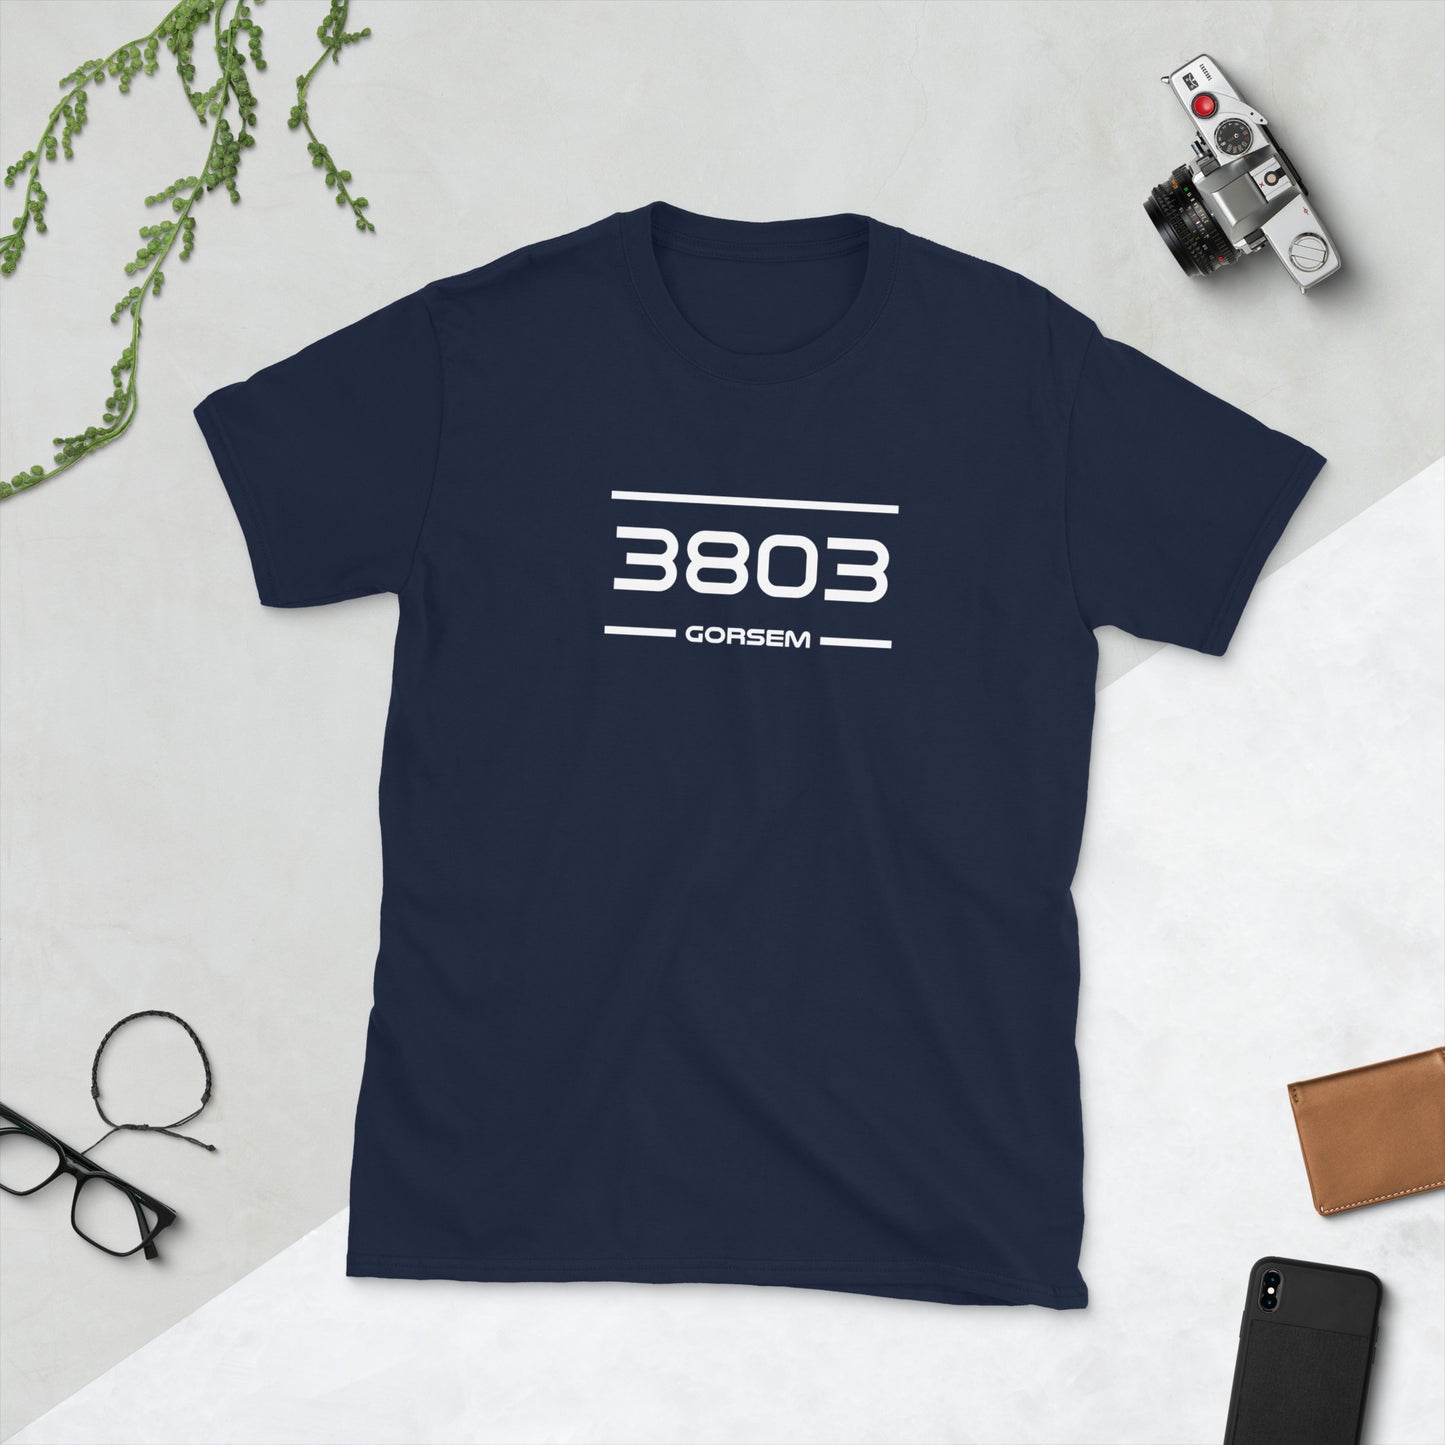 Tshirt - 3803 - Gorsem